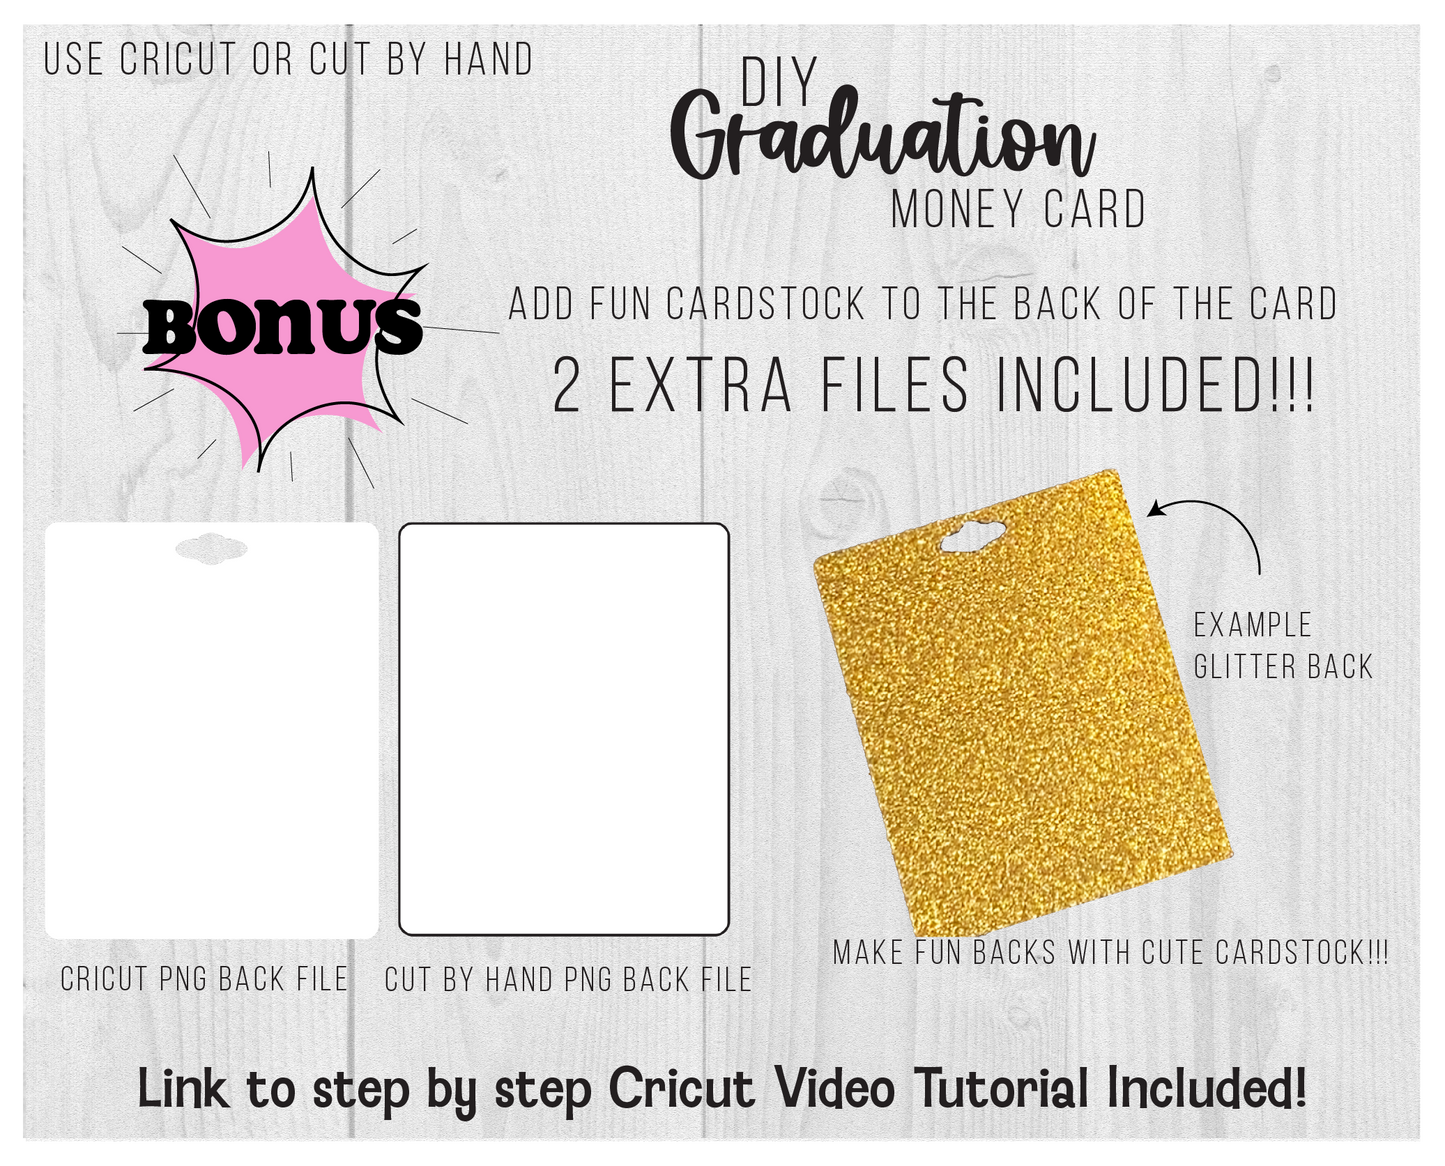 Printable Graduation Way to Go Lip Balm Money Card Template